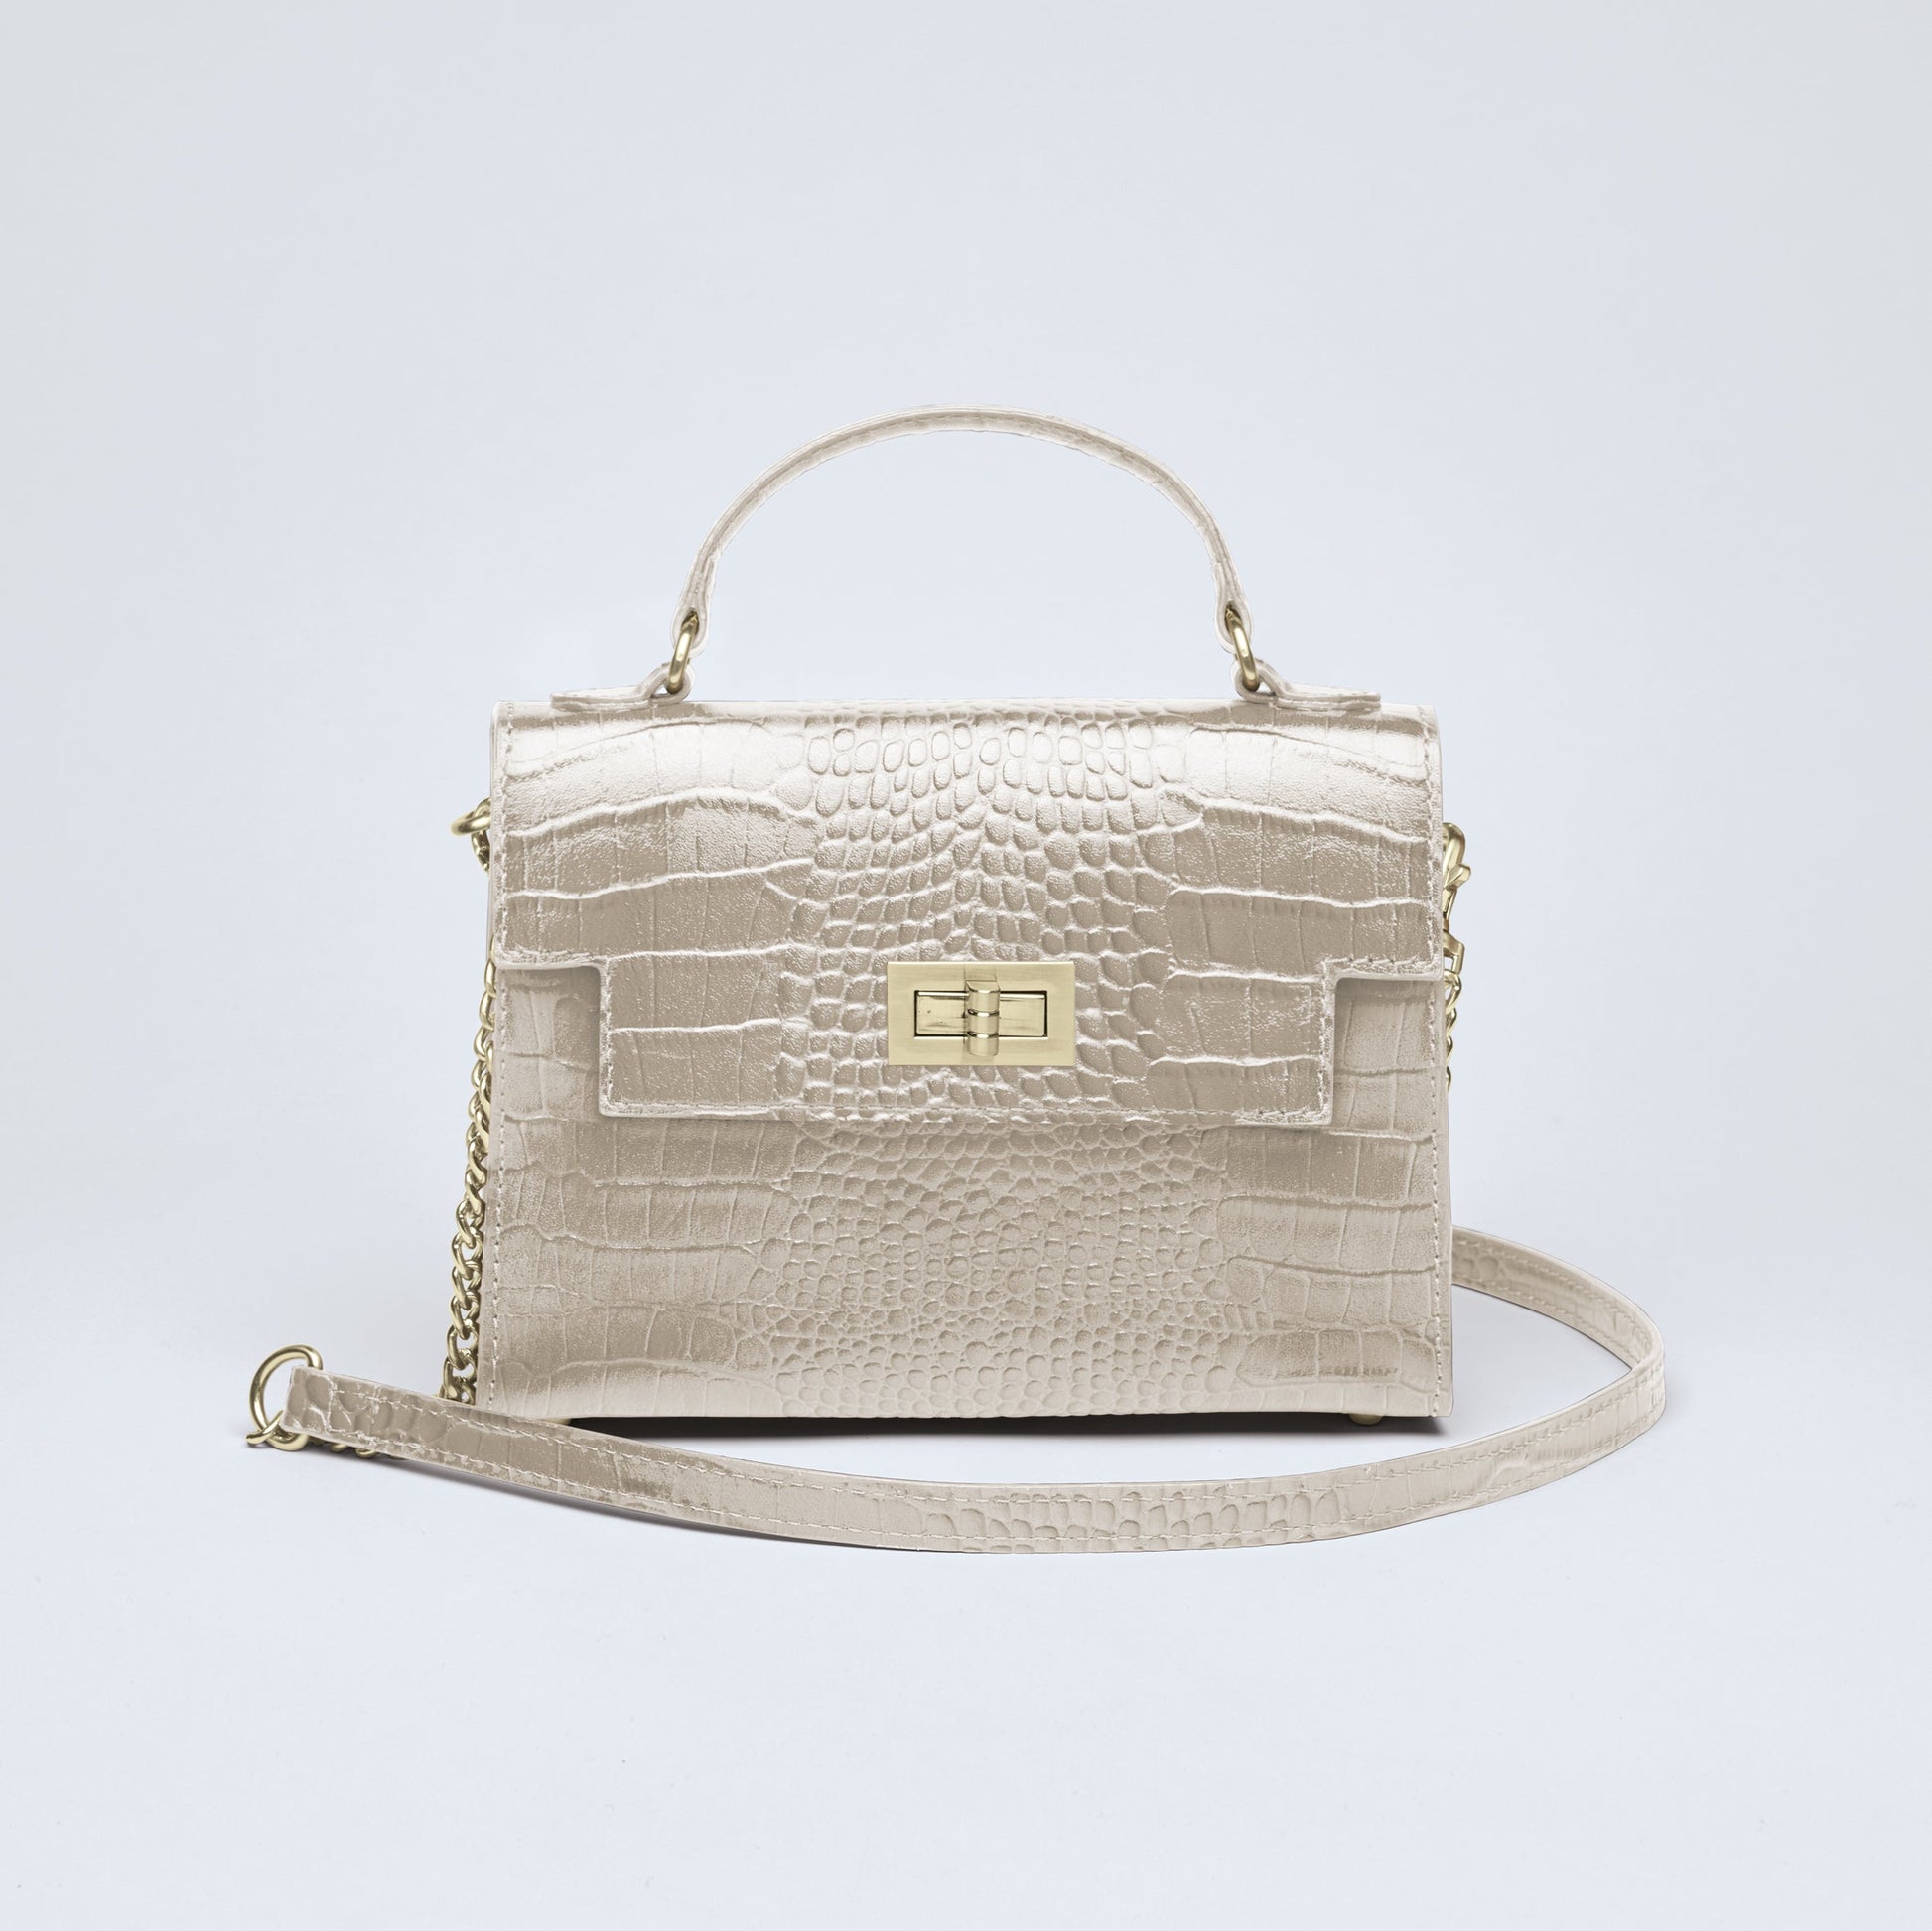 Croco leather handbag Monceau Taupe